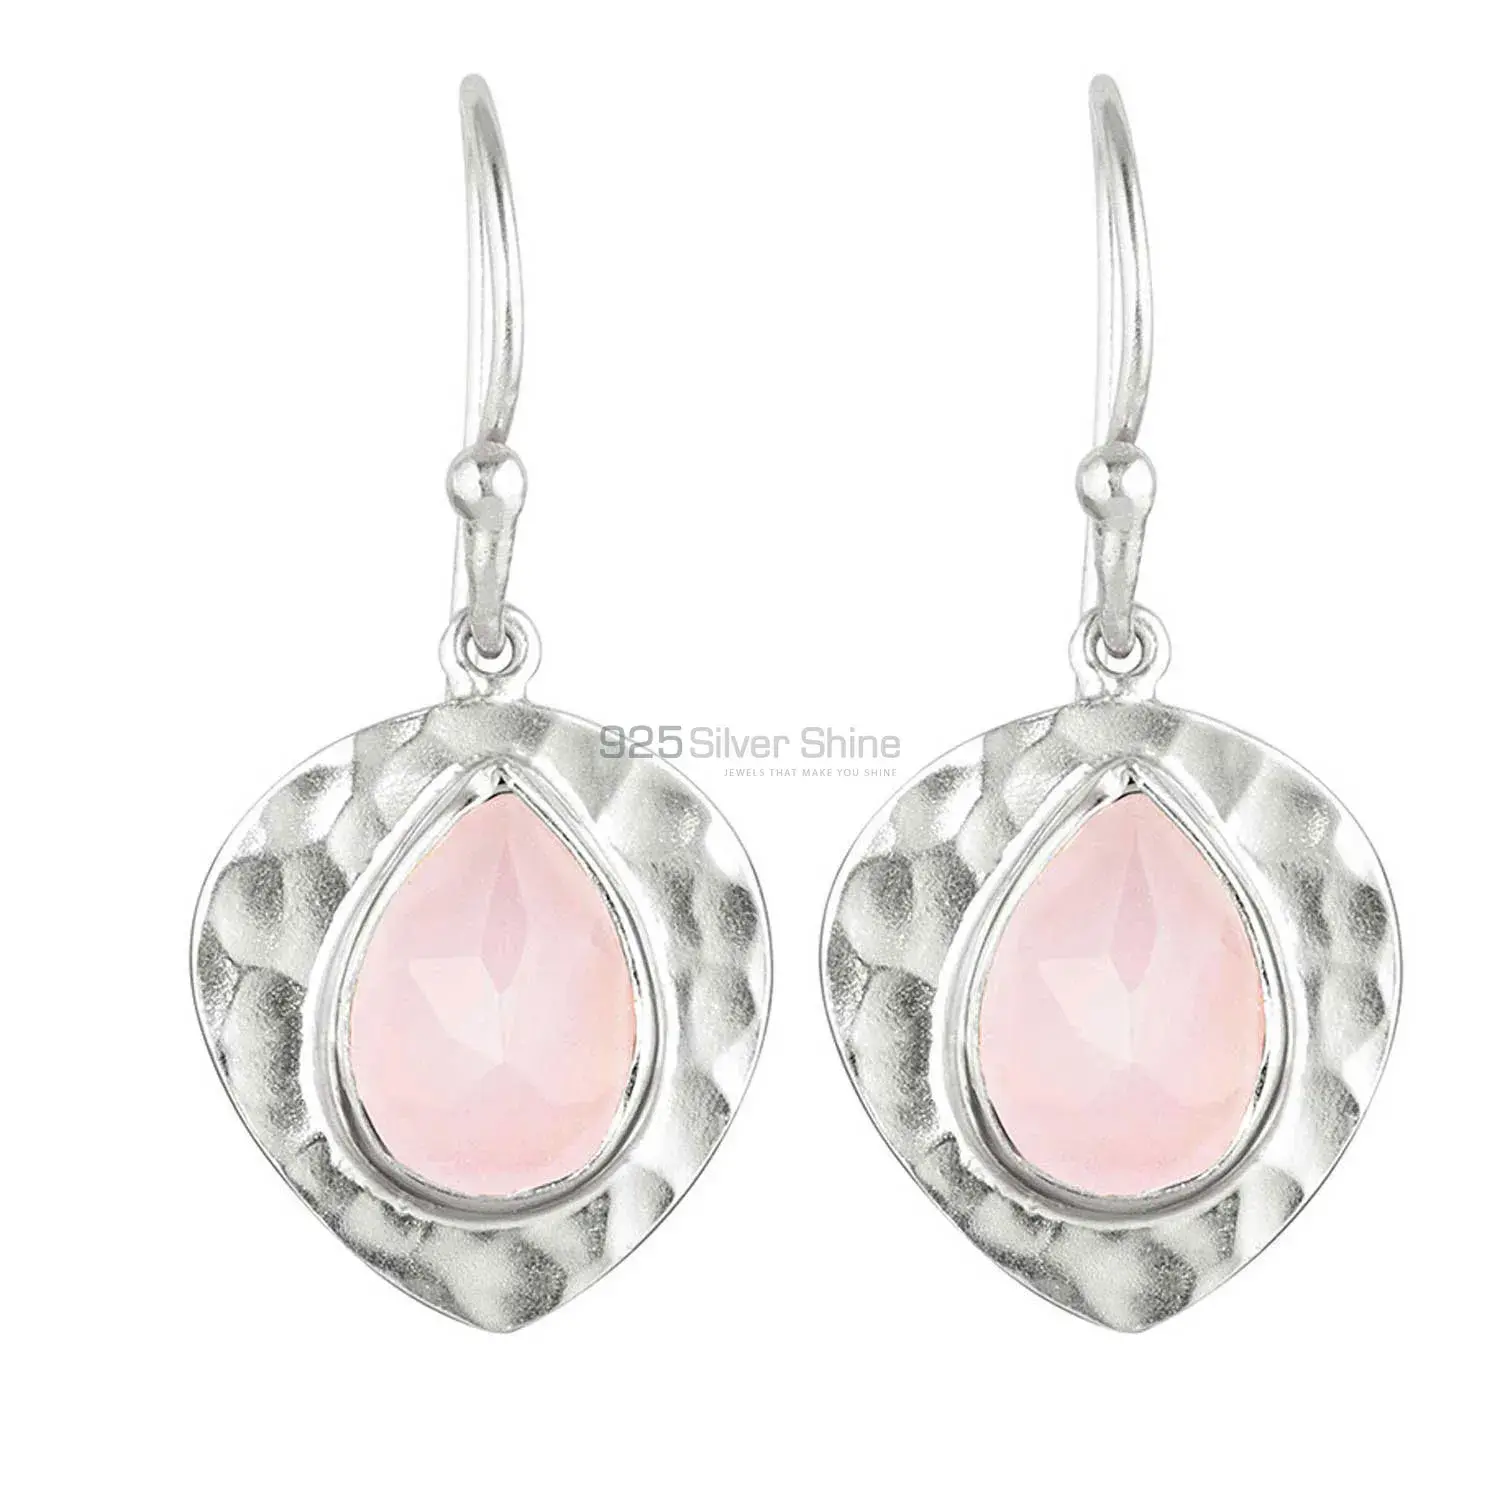 Solid 925 Silver Earrings In Natural Rose Quartz Gemstone 925SE1837